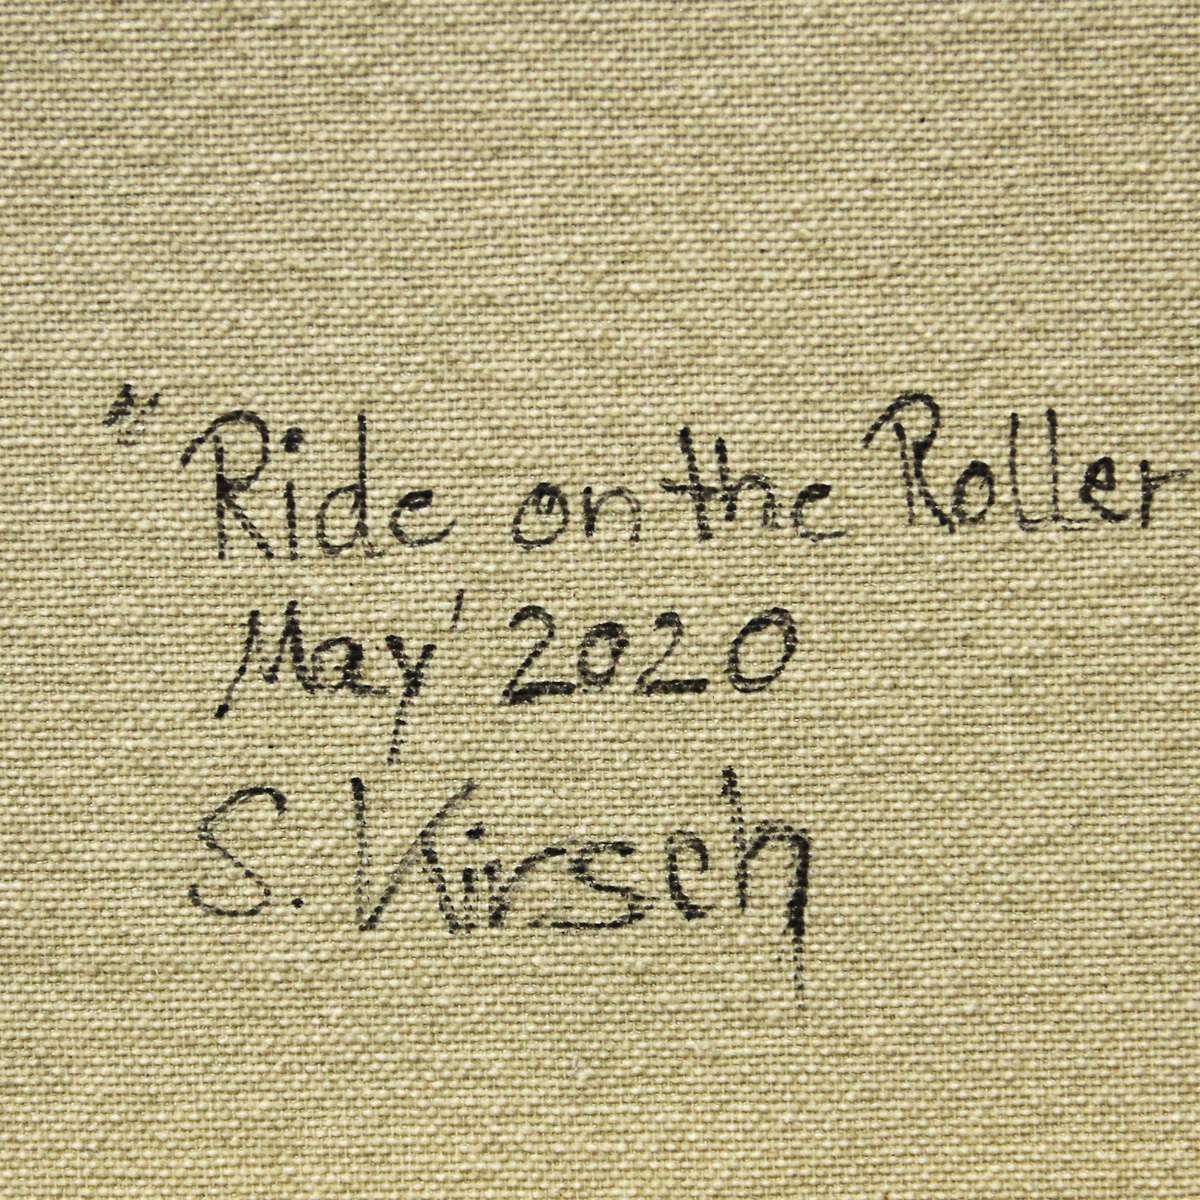 S. Kirsch: "Ride on the Roller Coaster", Originalgemälde (Unikat) (A)